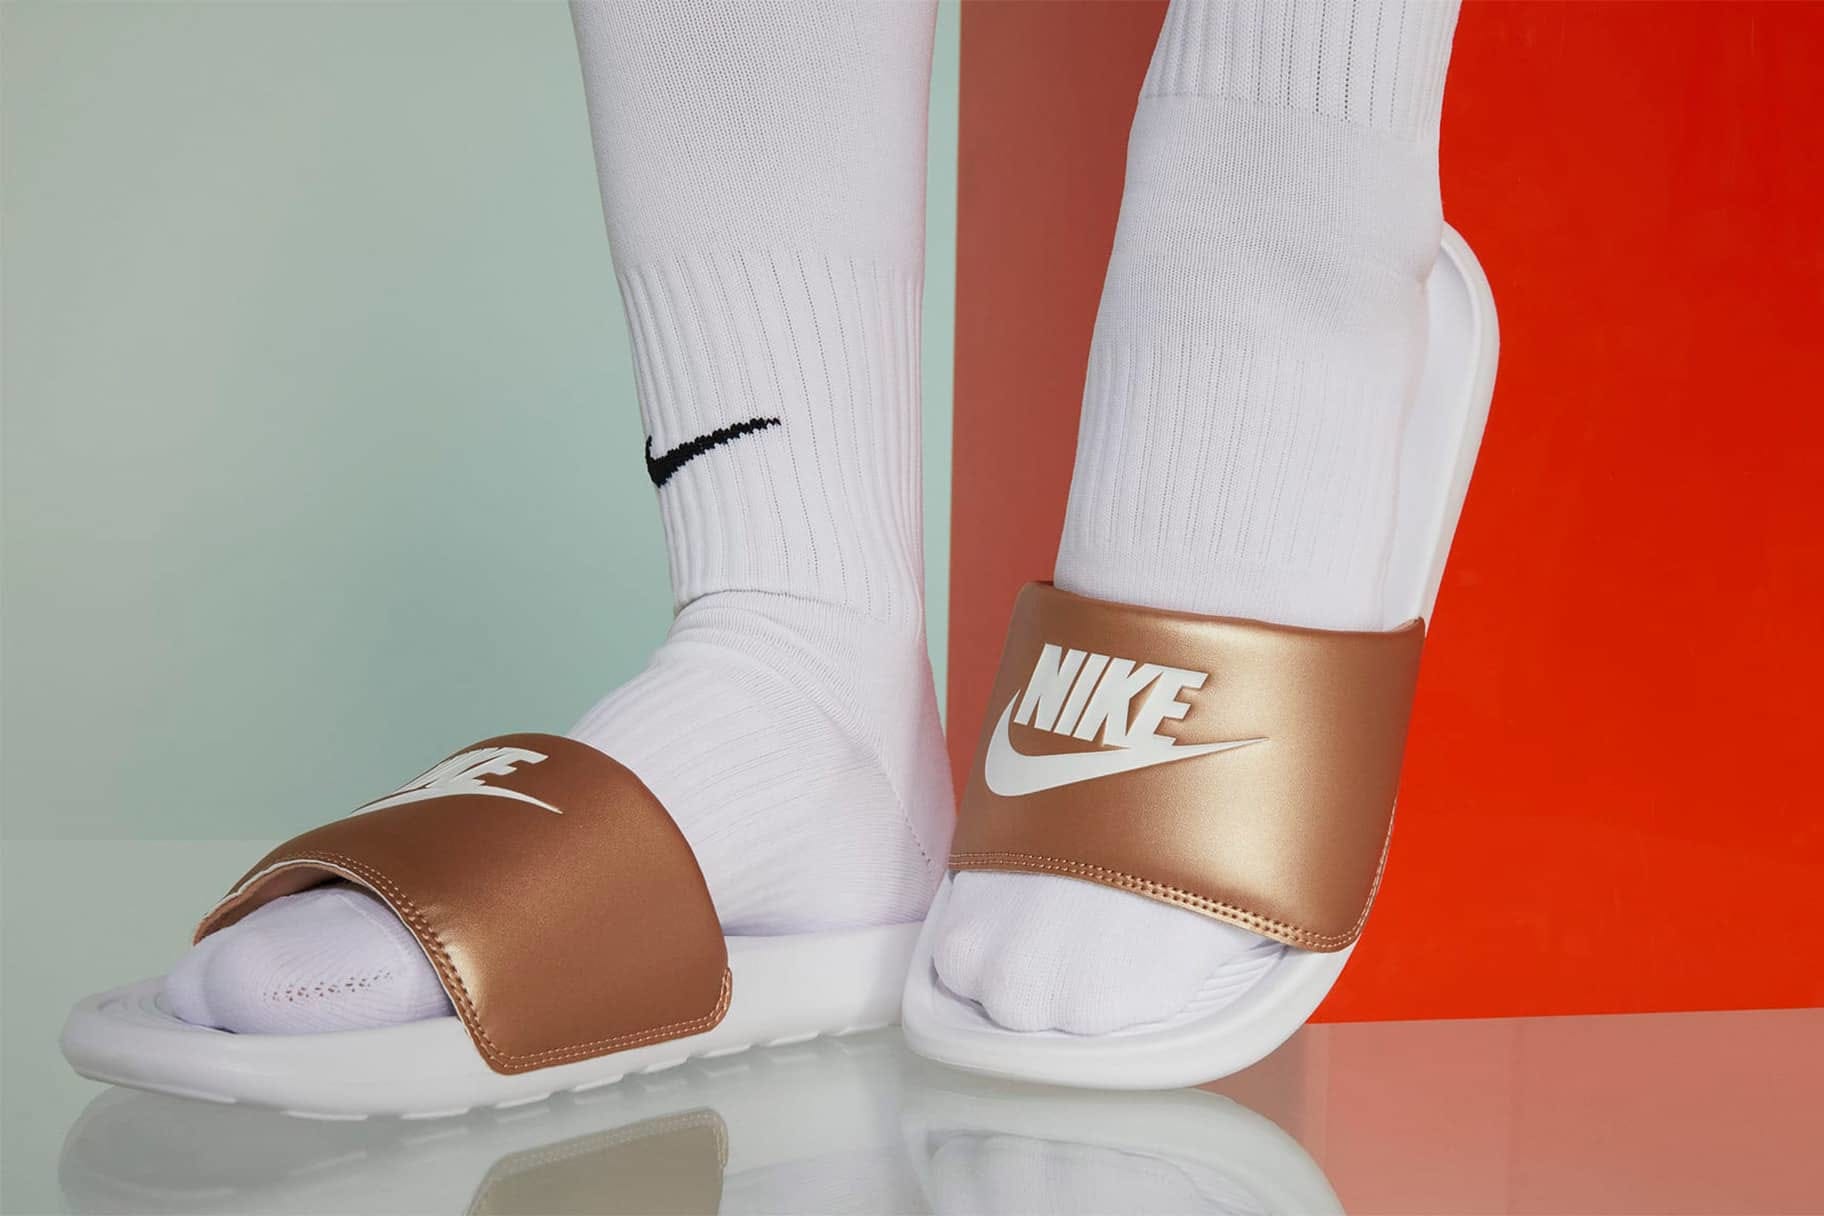 Chaussons Nike plus confortables.